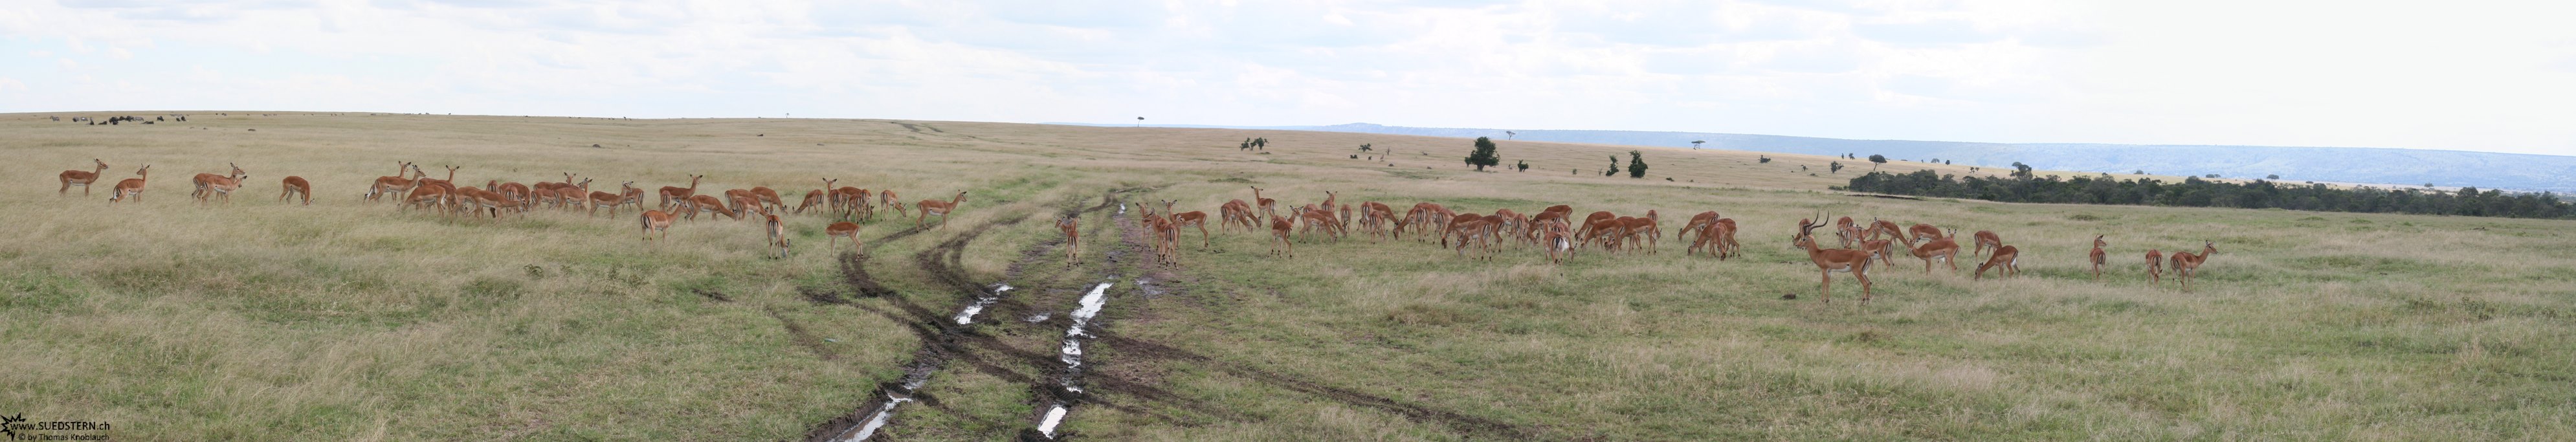 2007-04-14 - Kenya - Massai Mara - group of gazelles panorama